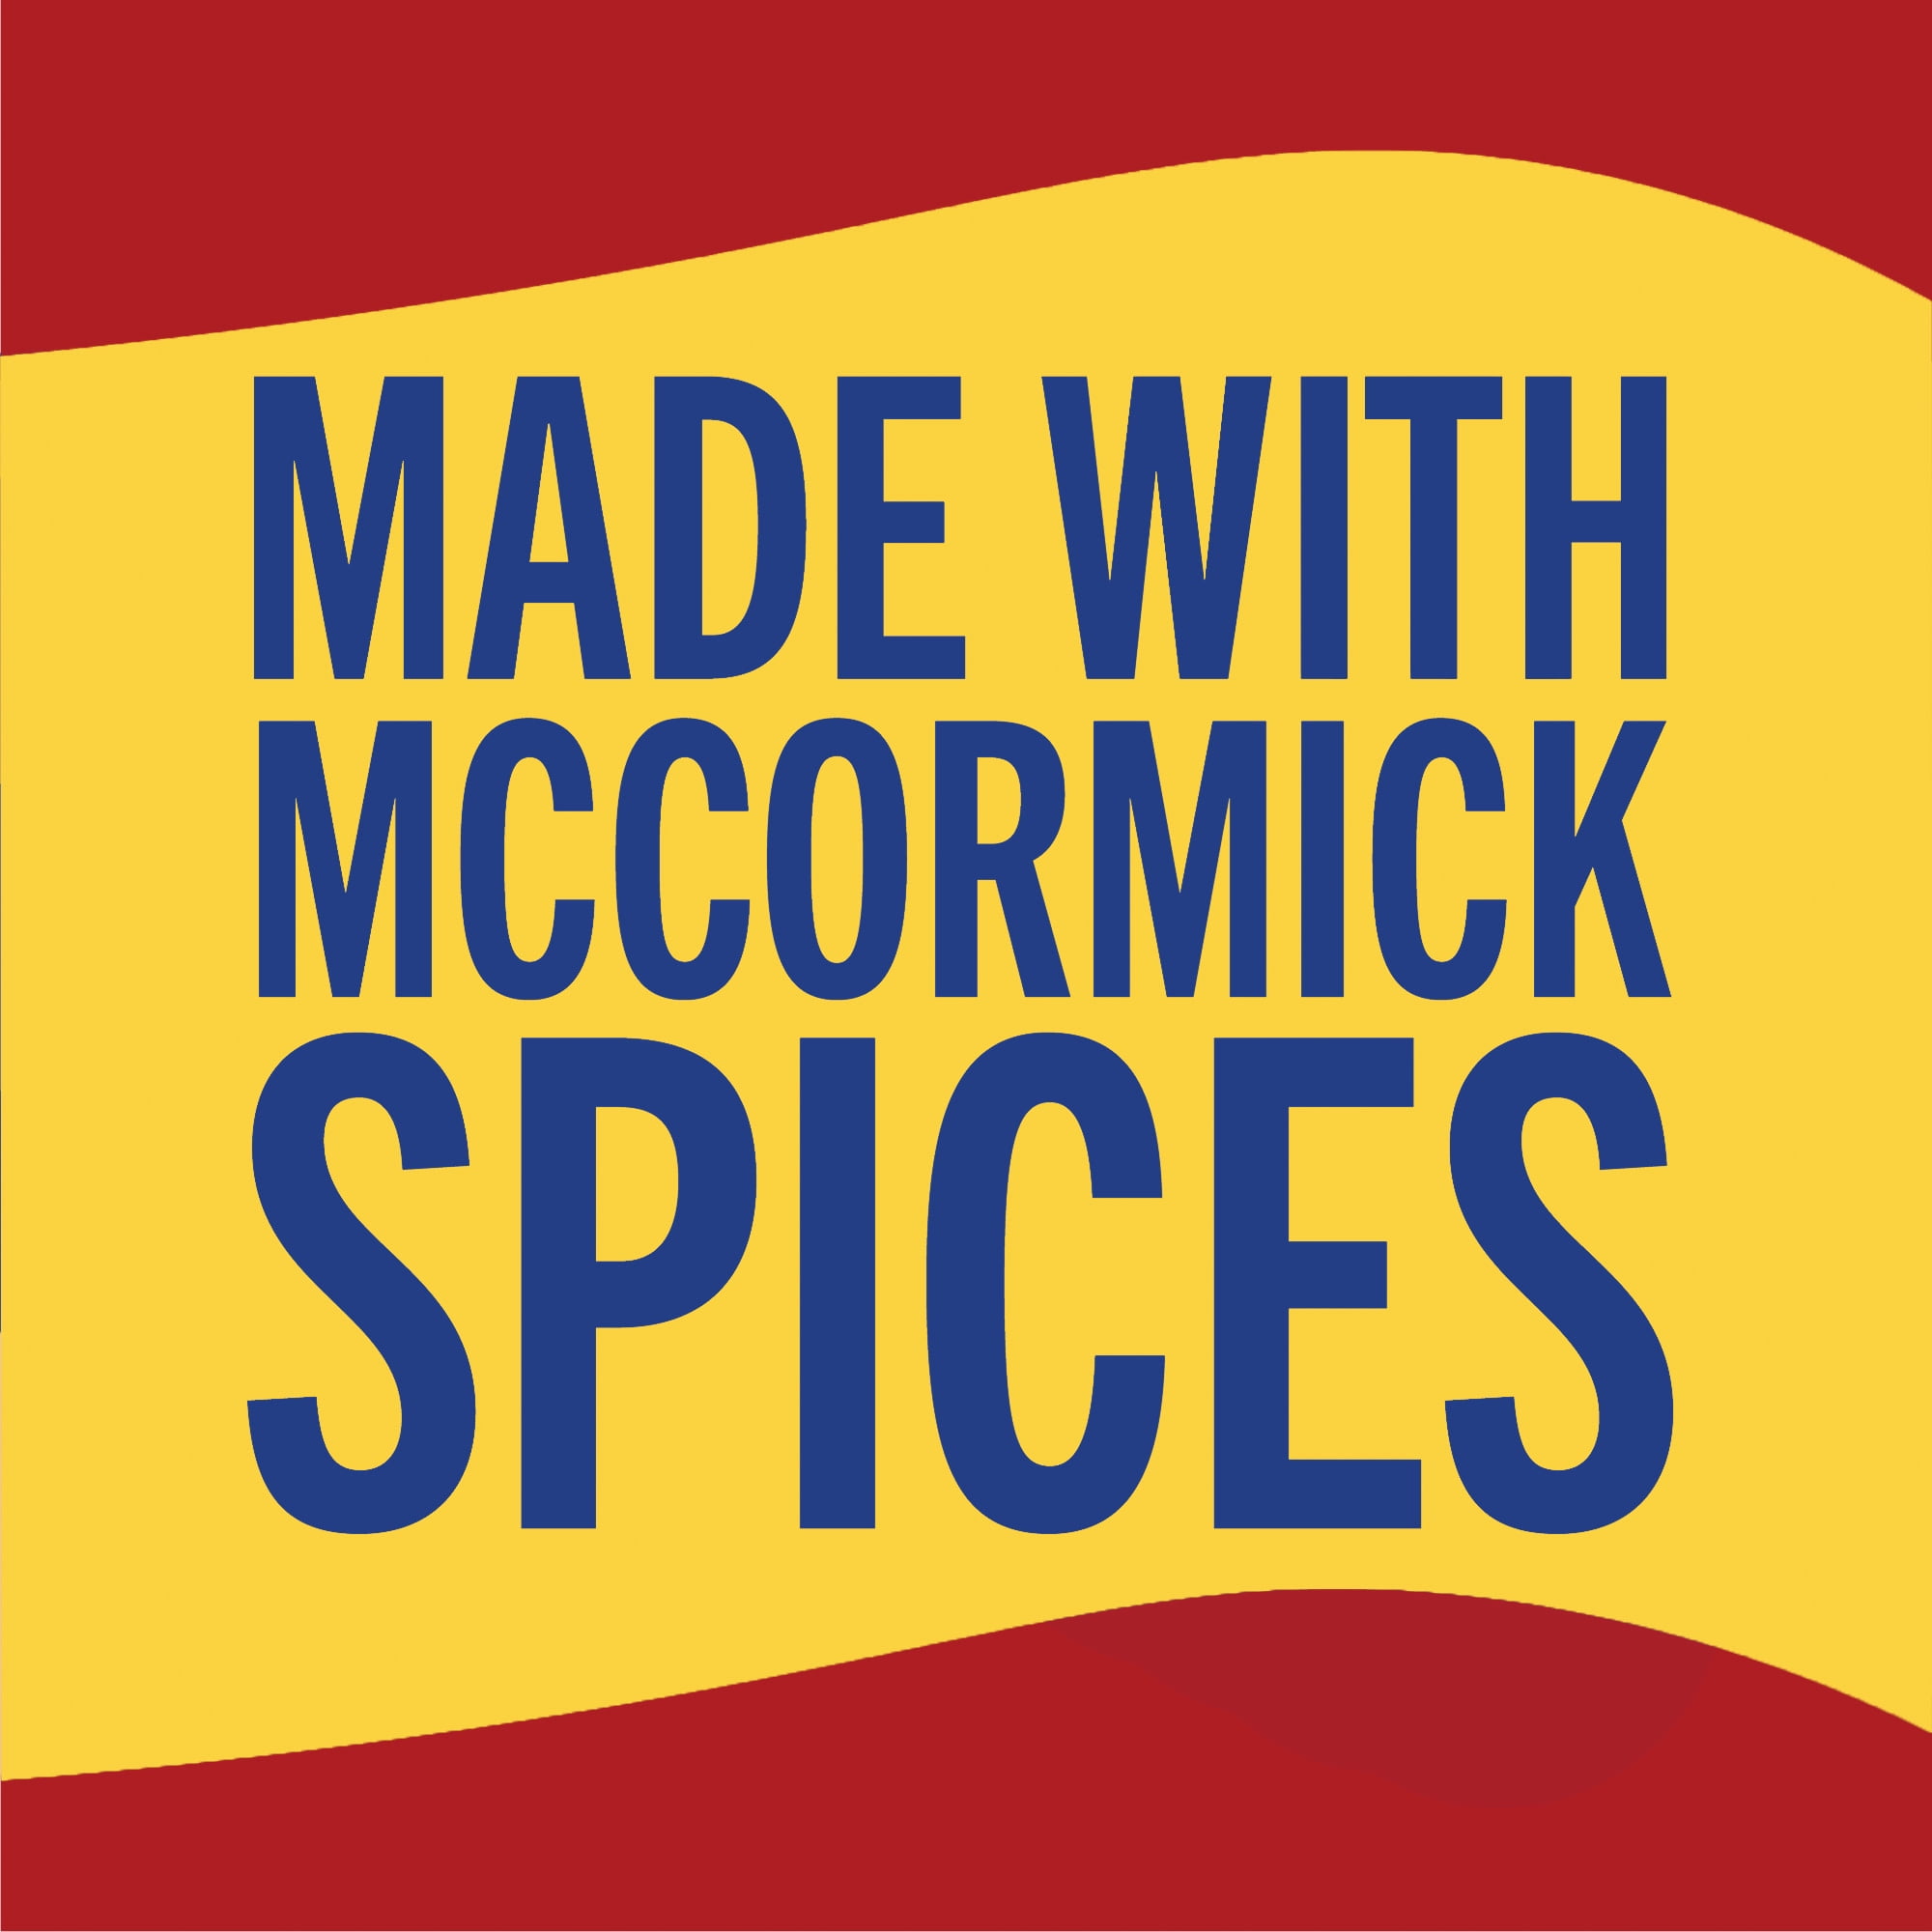  Generic McCormick Bag 'n Season Pork Chops Cooking Bag and  Seasoning Mix,1.06 oz (Three Pack) : Everything Else